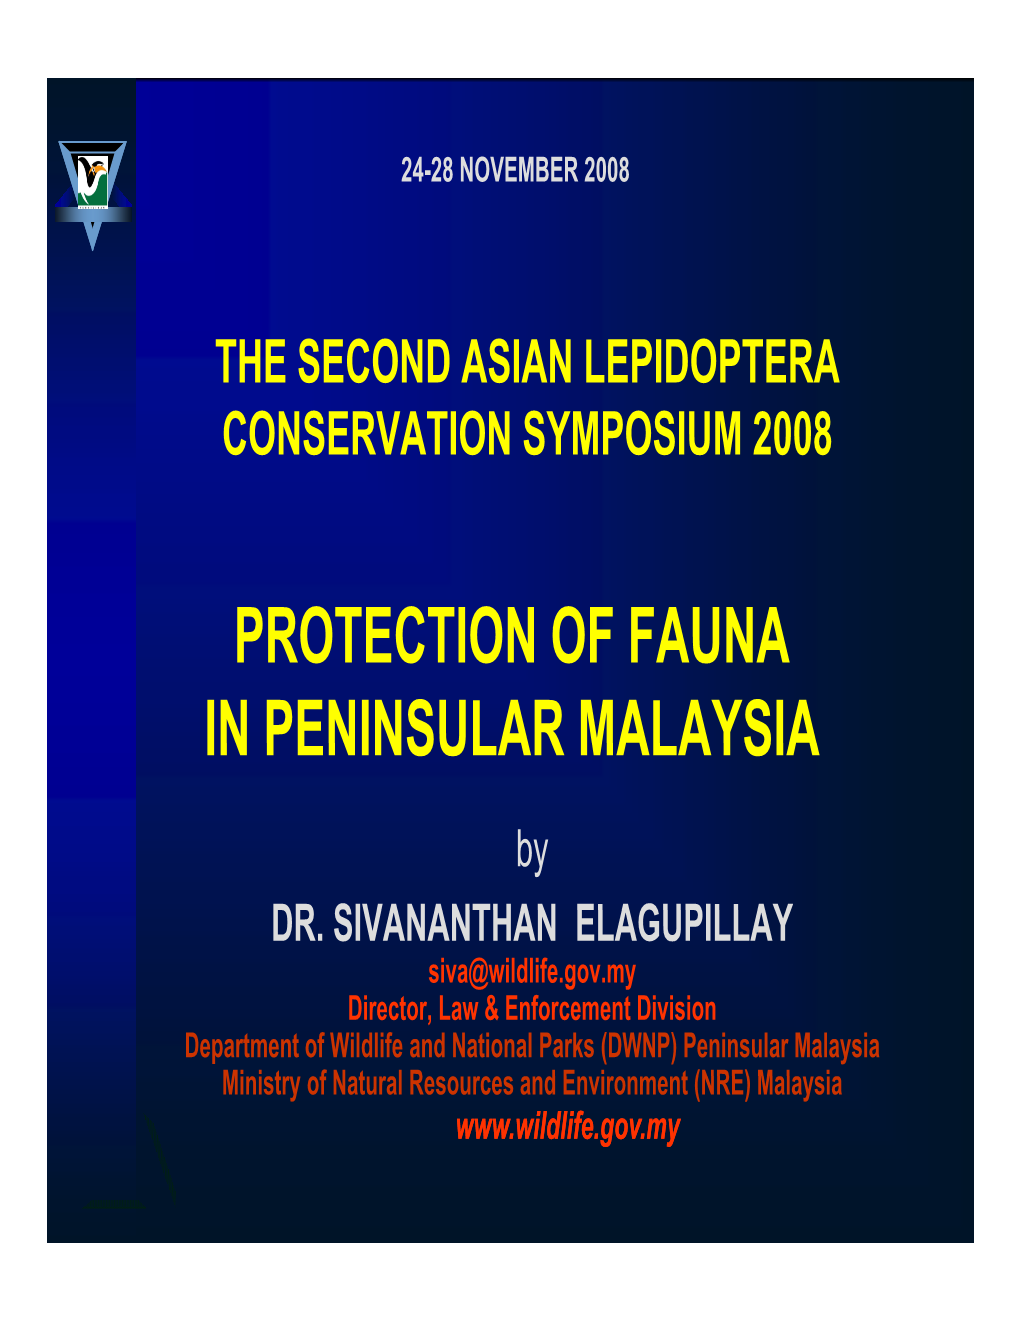 Conservation Status of Fauna in Peninsular Malaysia